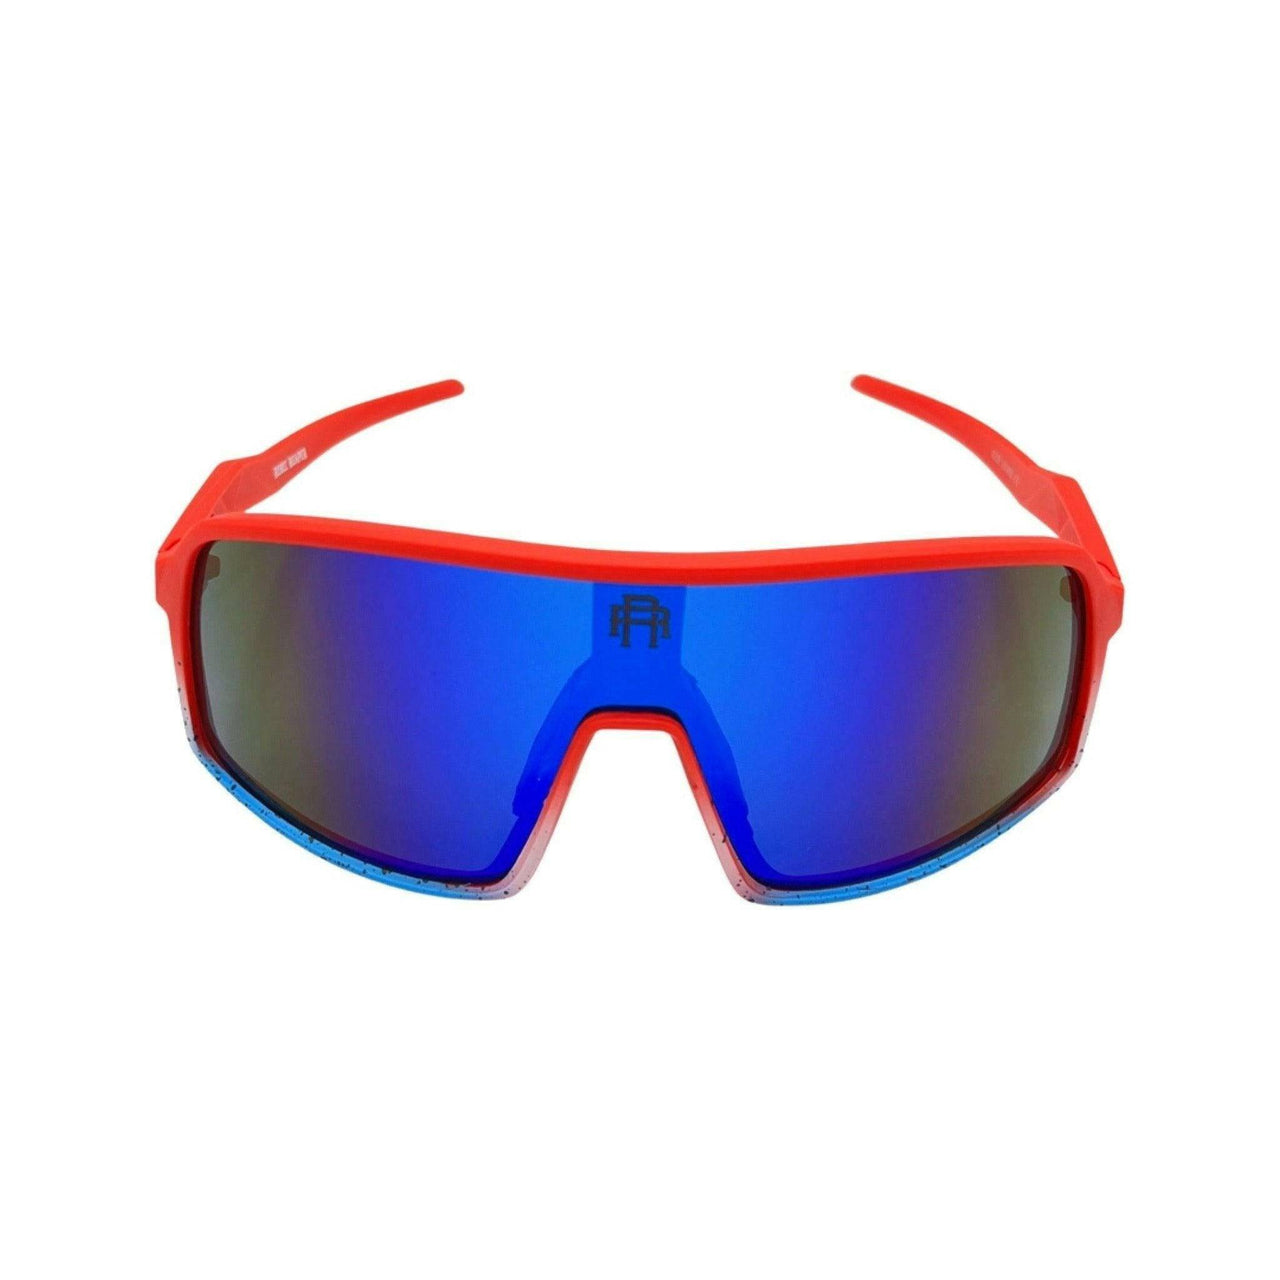 Yeti Red White & Blue Mirror Polarized Lens Sunglasses